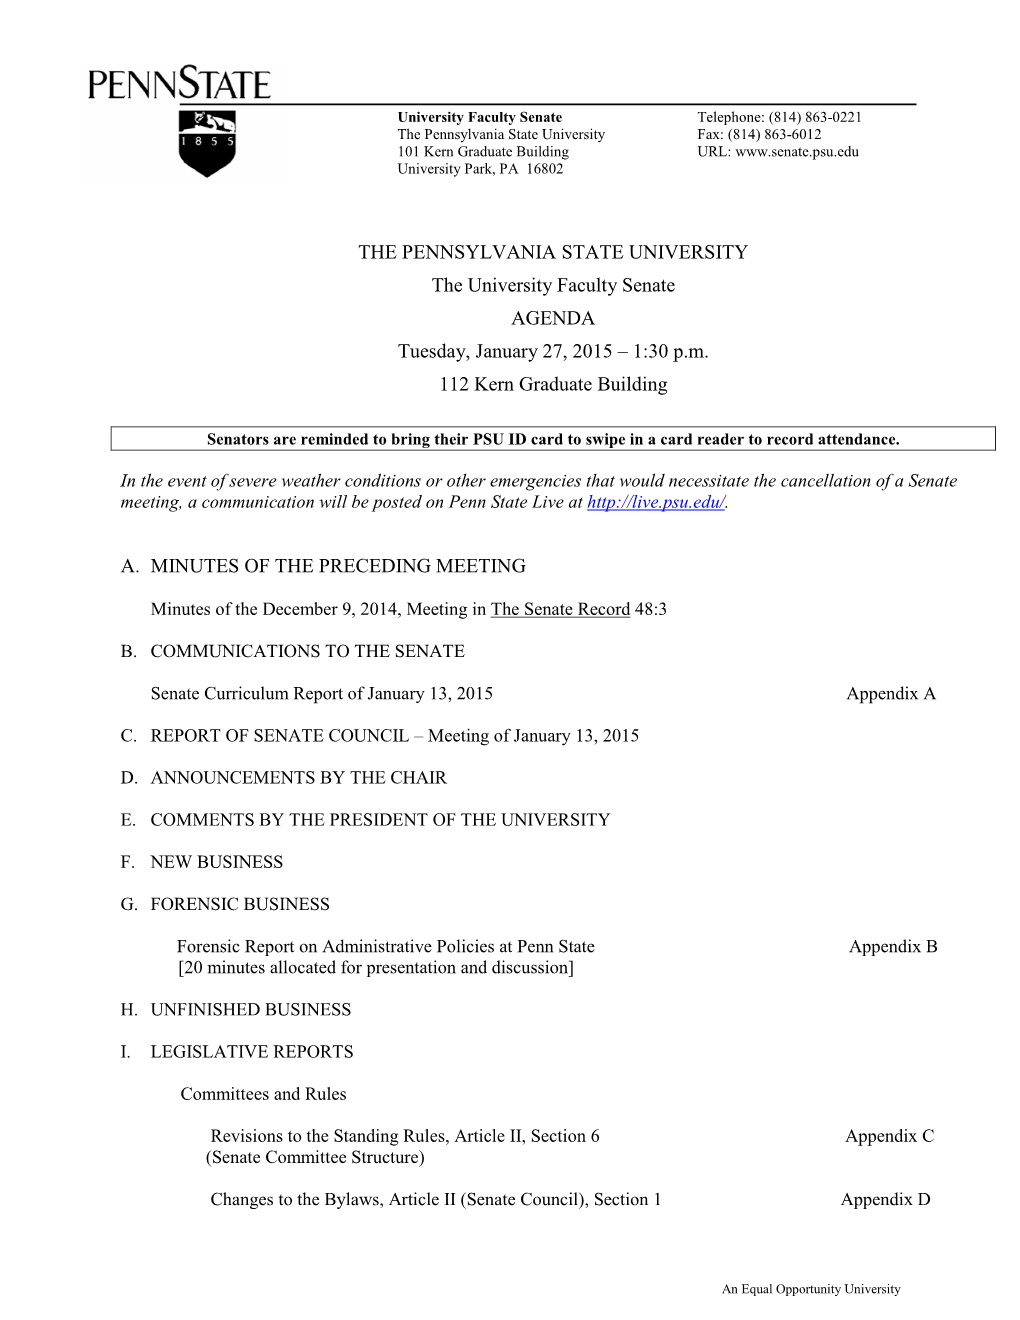 THE PENNSYLVANIA STATE UNIVERSITY the University Faculty Senate AGENDA Tuesday, January 27, 2015 – 1:30 P.M